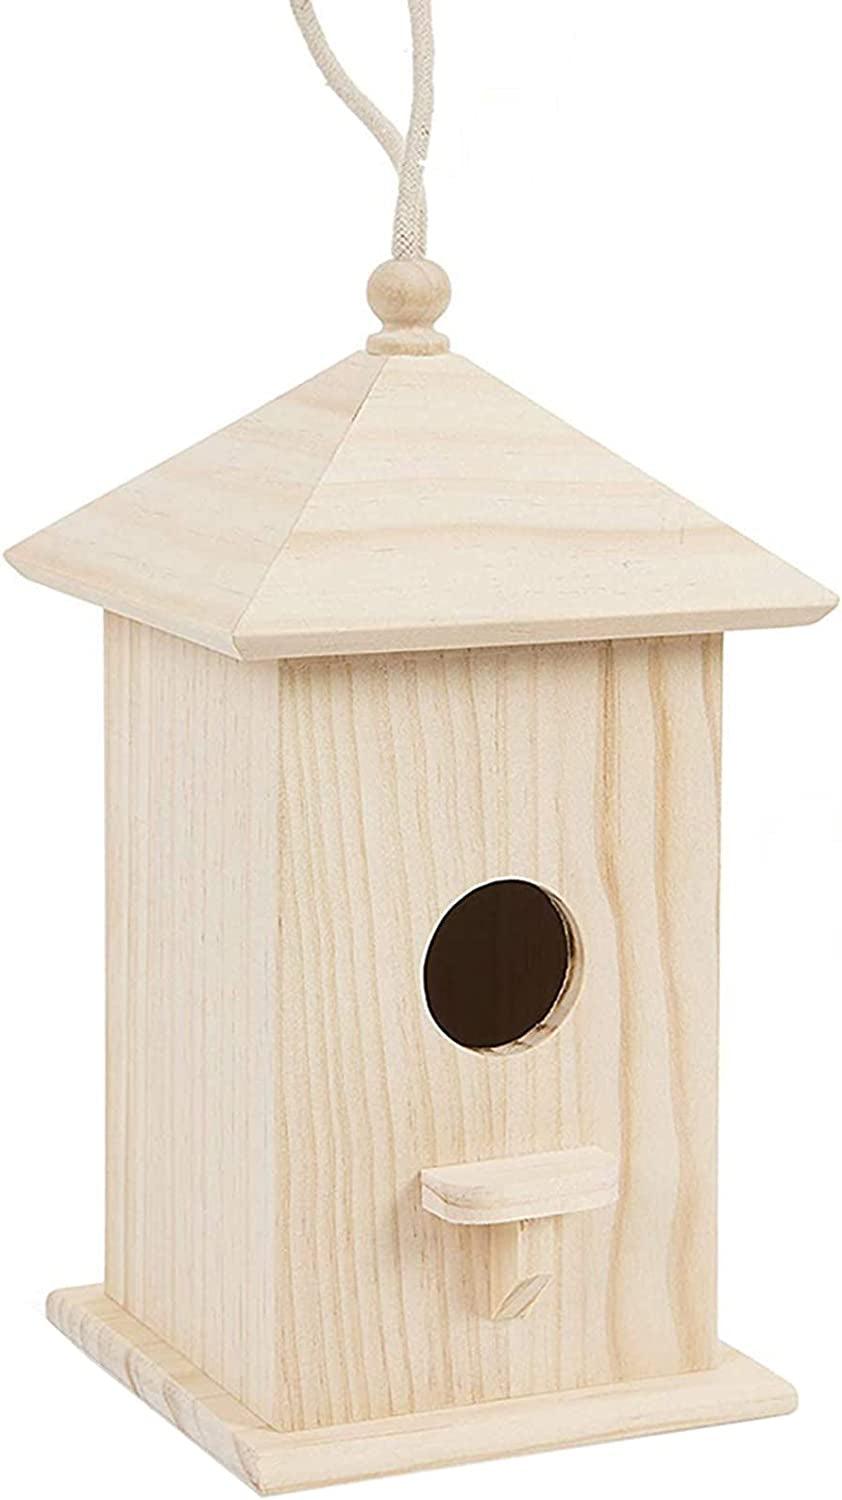 Wooden Birdhouse Creative Wooden Hanging Bird House for Small Bird DIY Birdcage Making or Decoration - WoodArtSupply